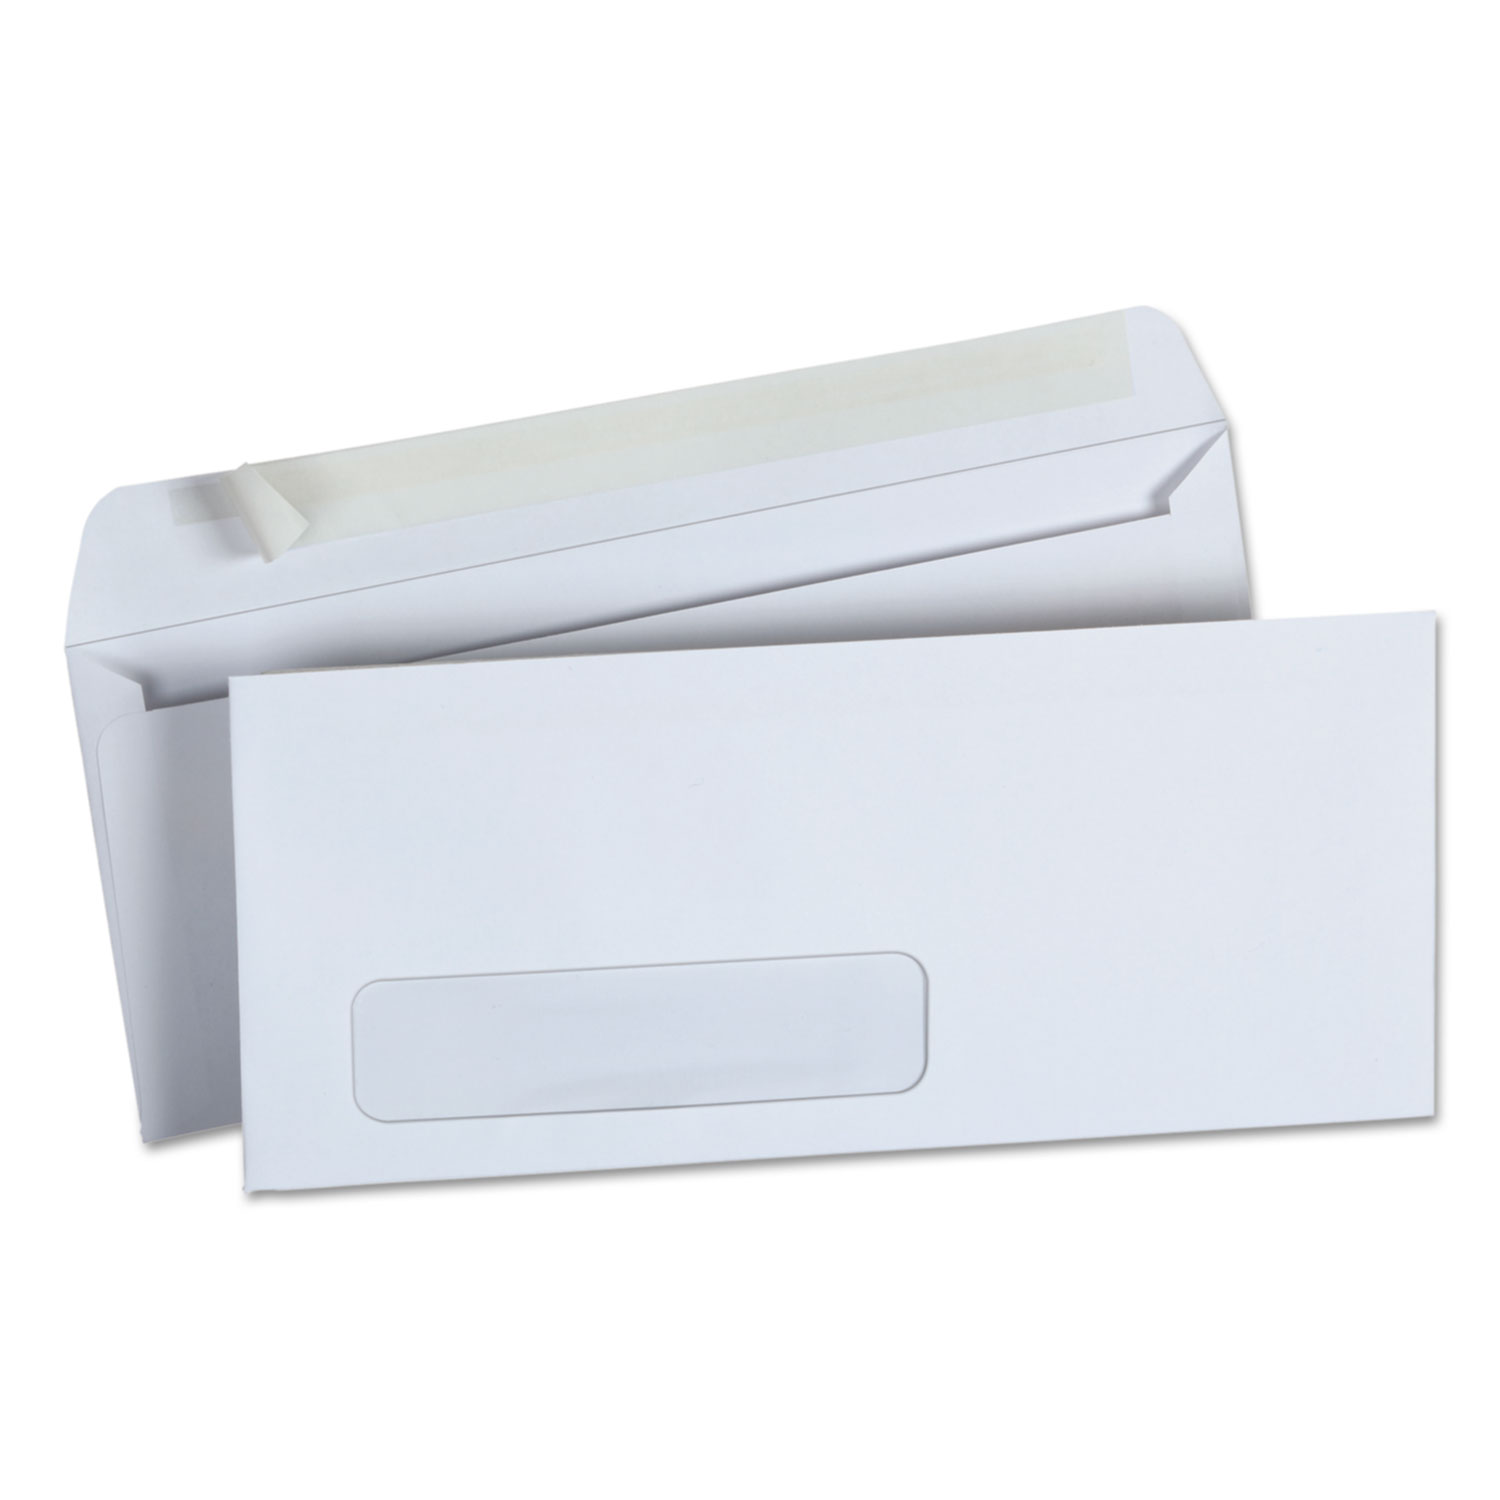  Universal UNV36005 Peel Seal Strip Business Envelope, #10, Square Flap, Self-Adhesive Closure, 4.13 x 9.5, White, 500/Box (UNV36005) 